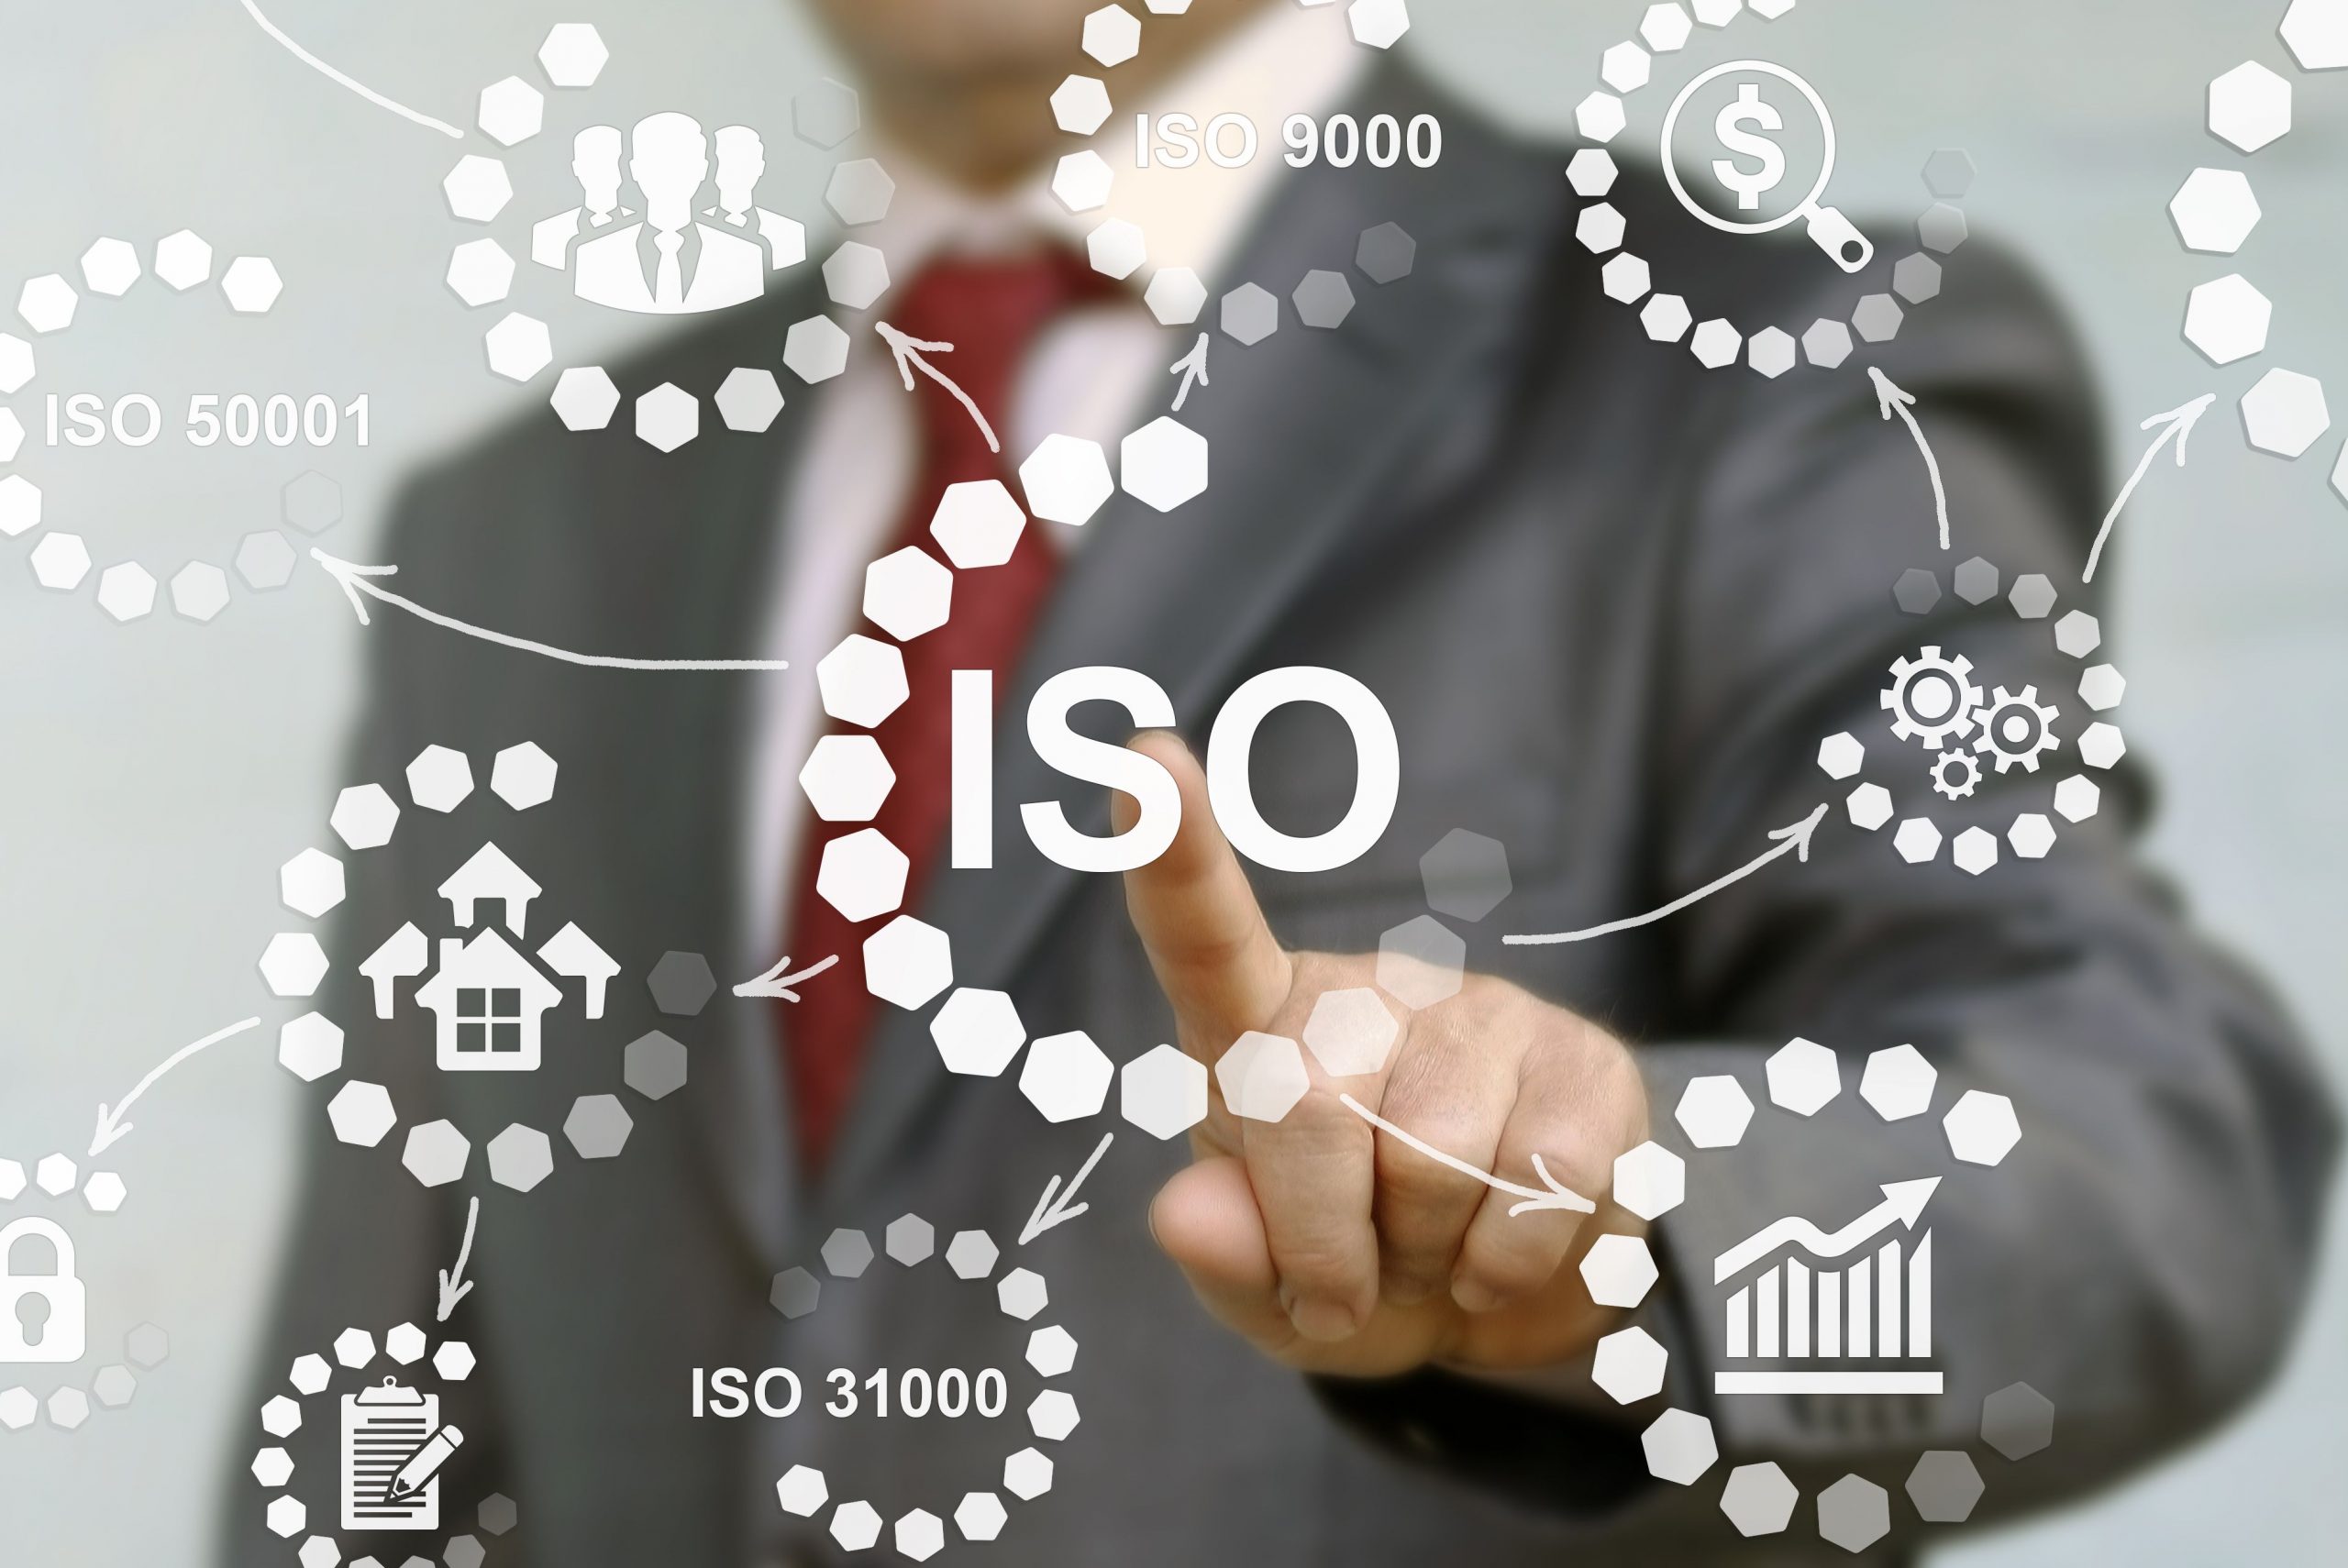 iso - International organization for standardization